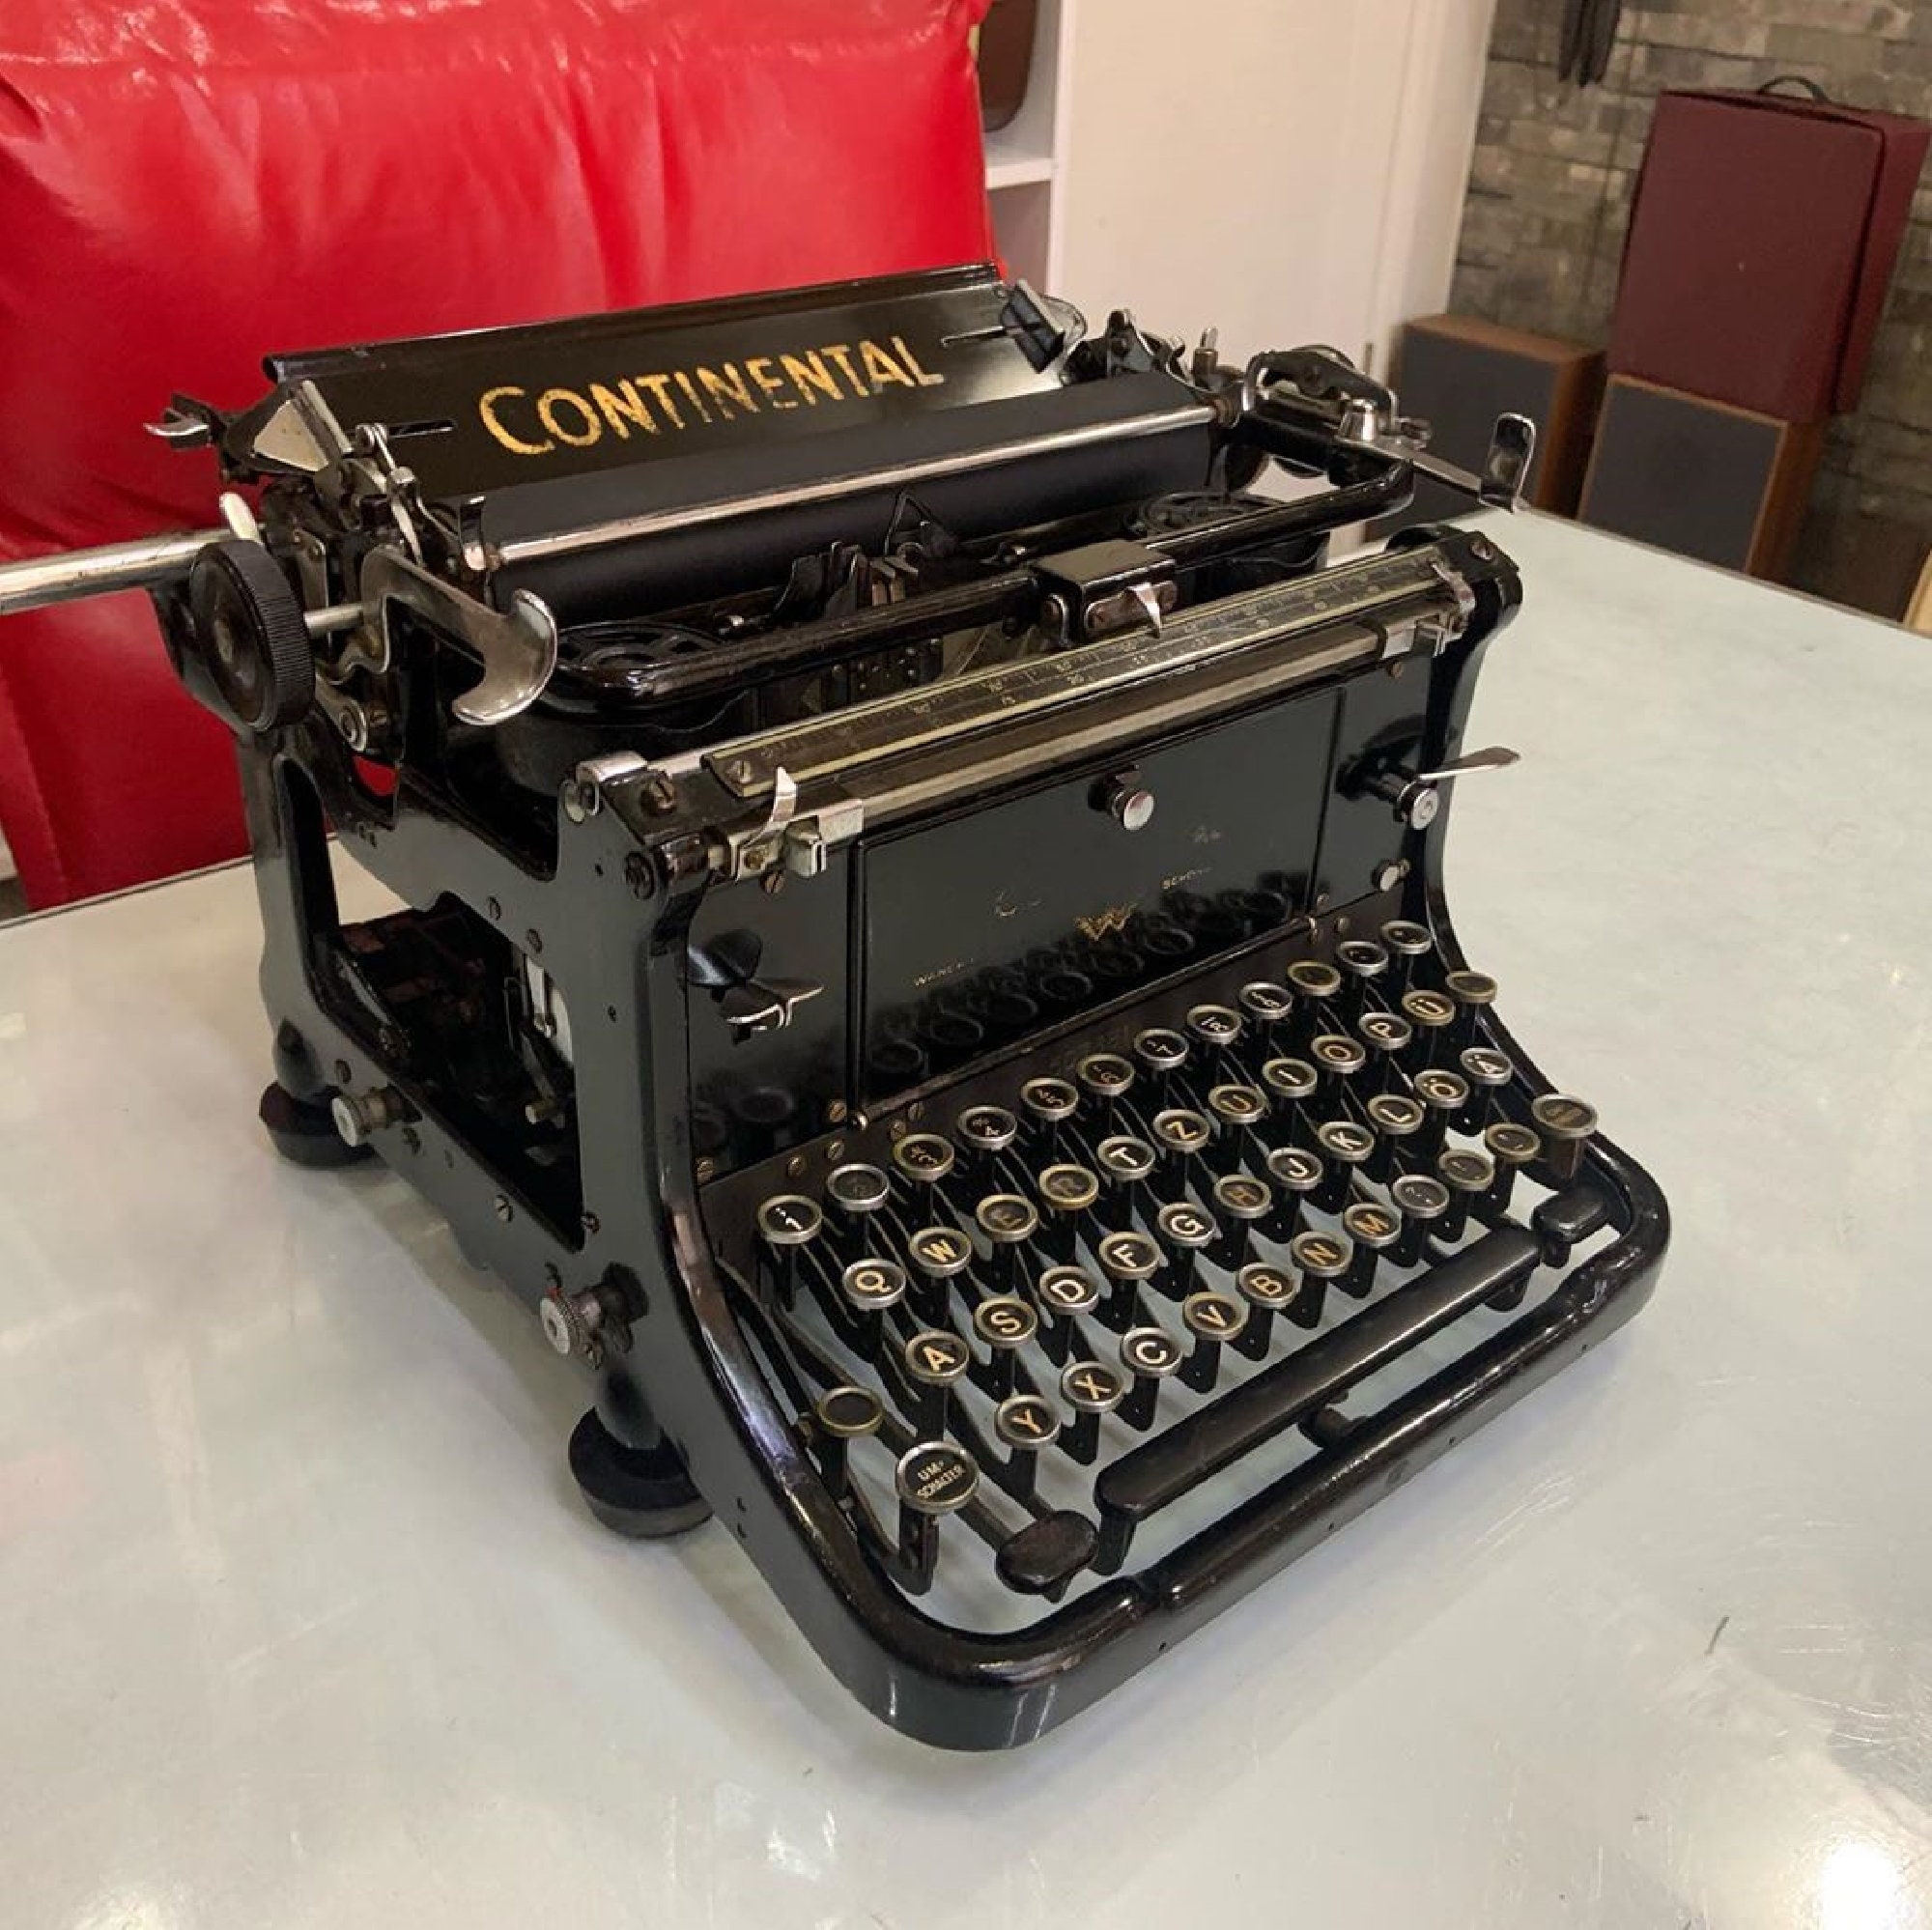 Máquina de escribir: un ordenador con impresora incorporada -  distritooficina